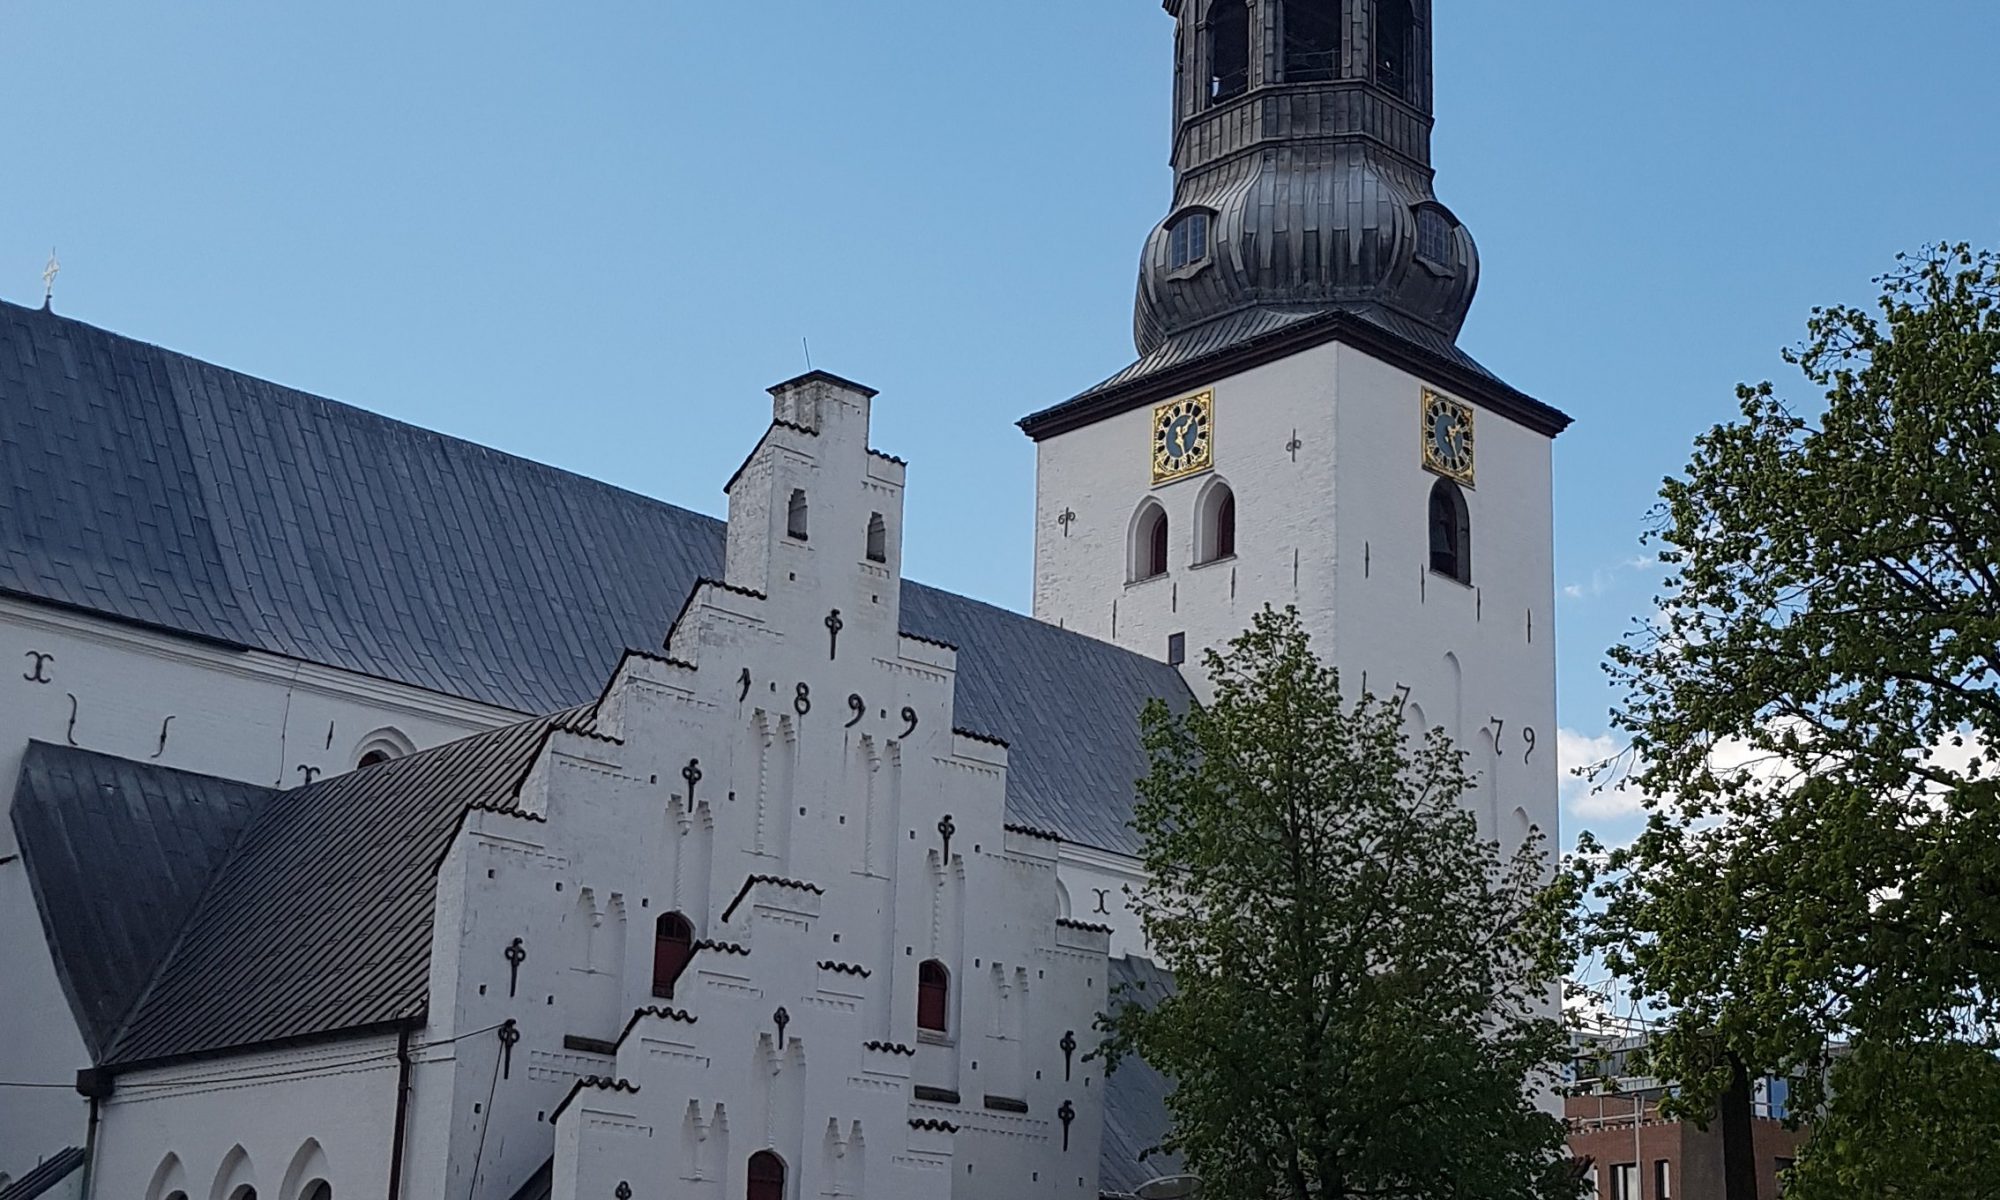 Budolfi Church in Aalborg